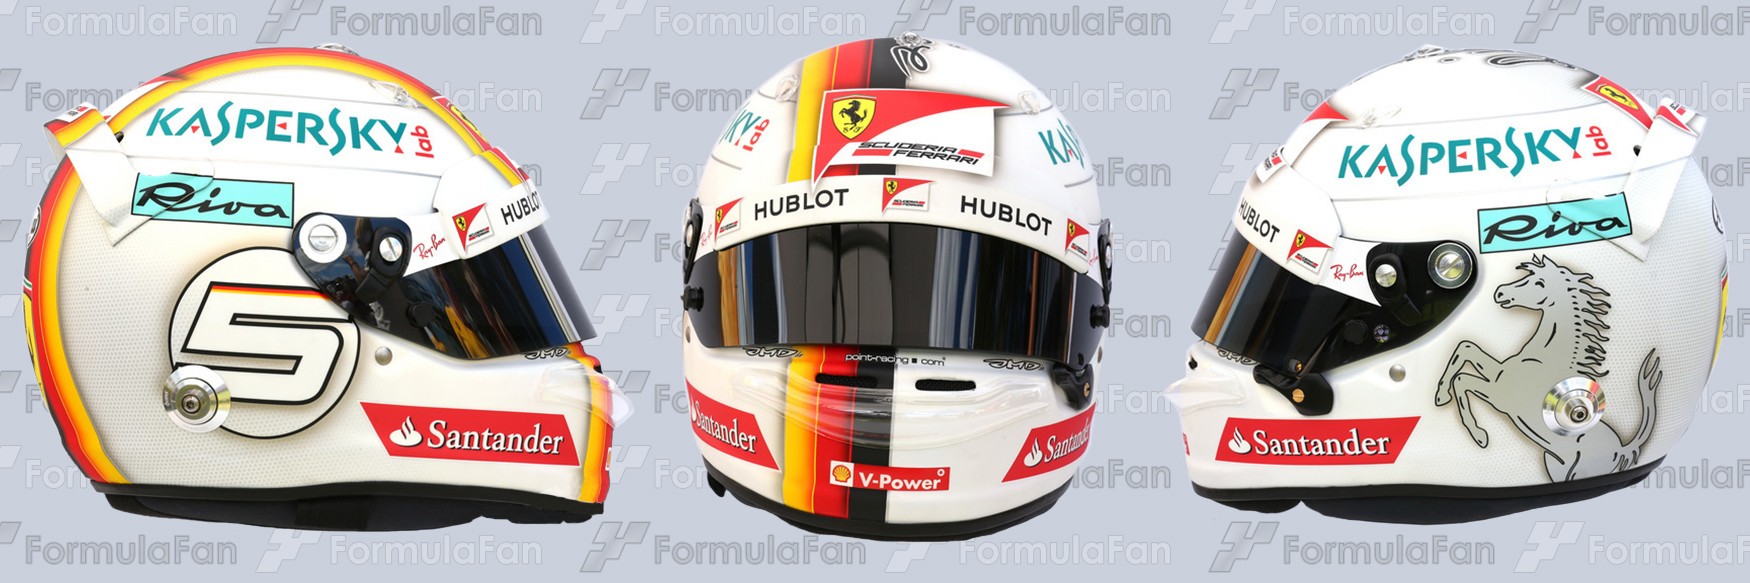 Шлем Себастьяна Феттеля на сезон 2017 года | 2017 helmet of Sebastian Vettel